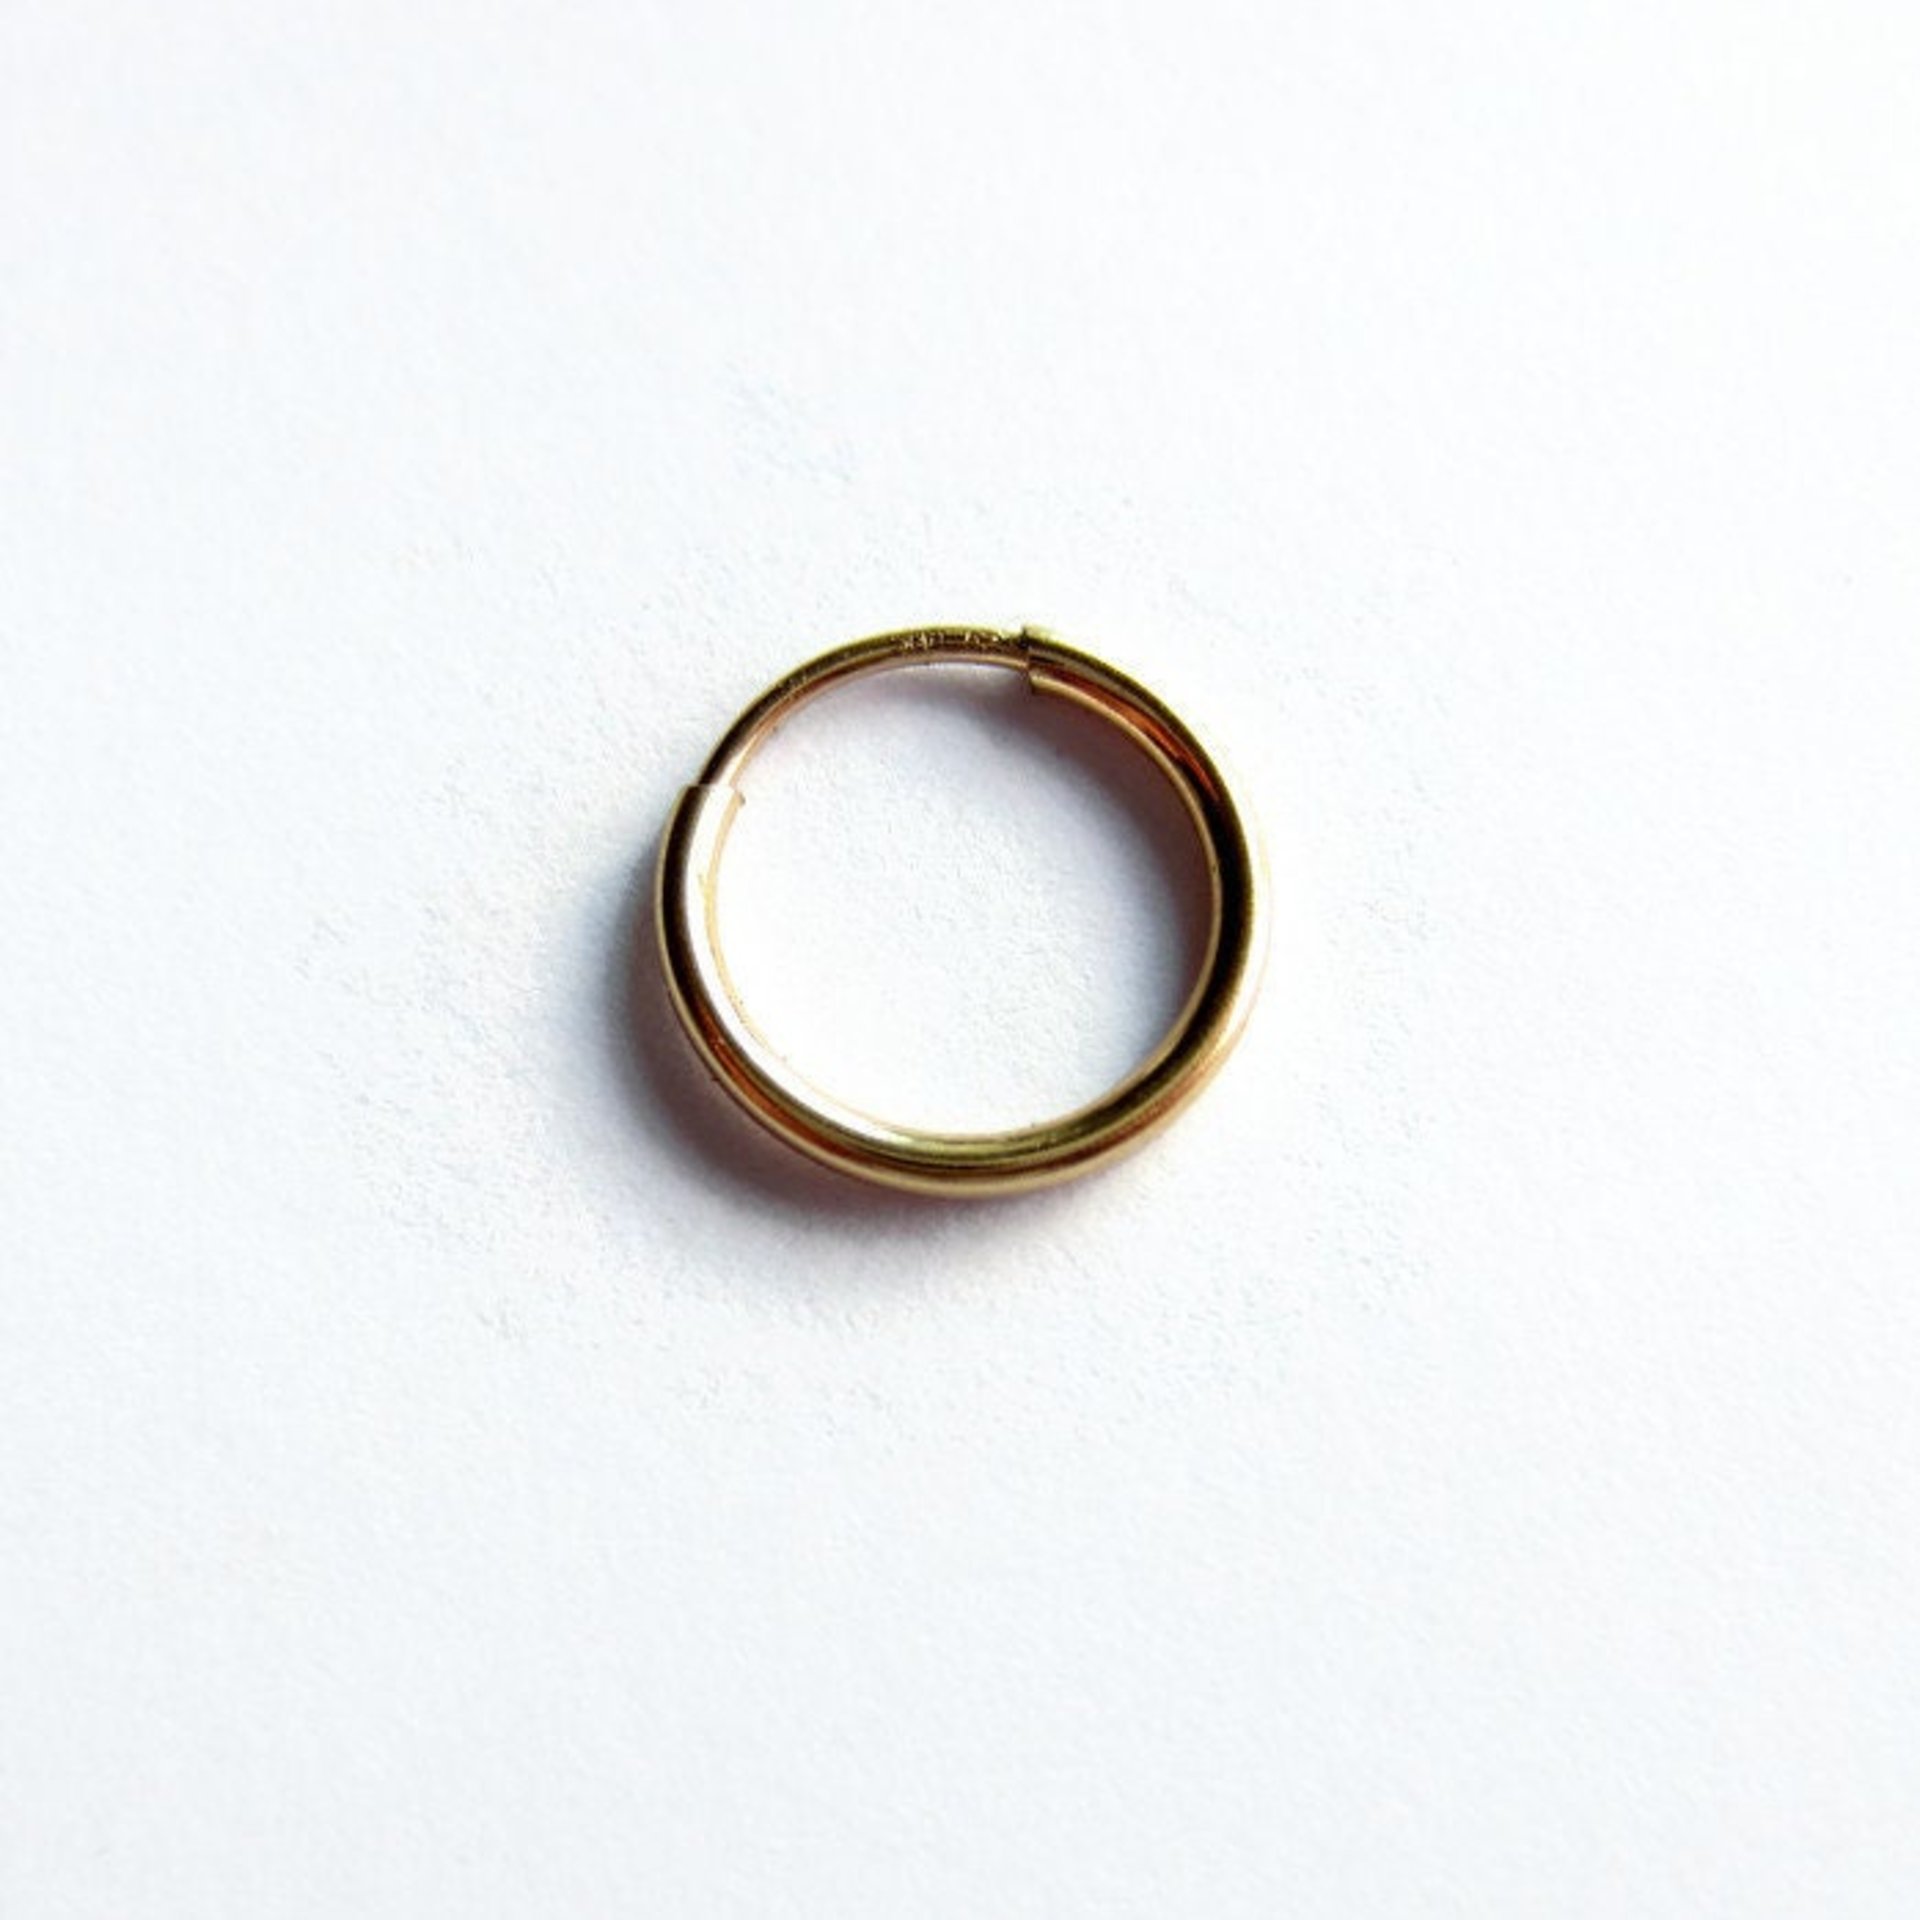 Single 12mm 14K Gold Filled Huggie Hoop Earring ~ The Tiny Tree Frog Jewellery